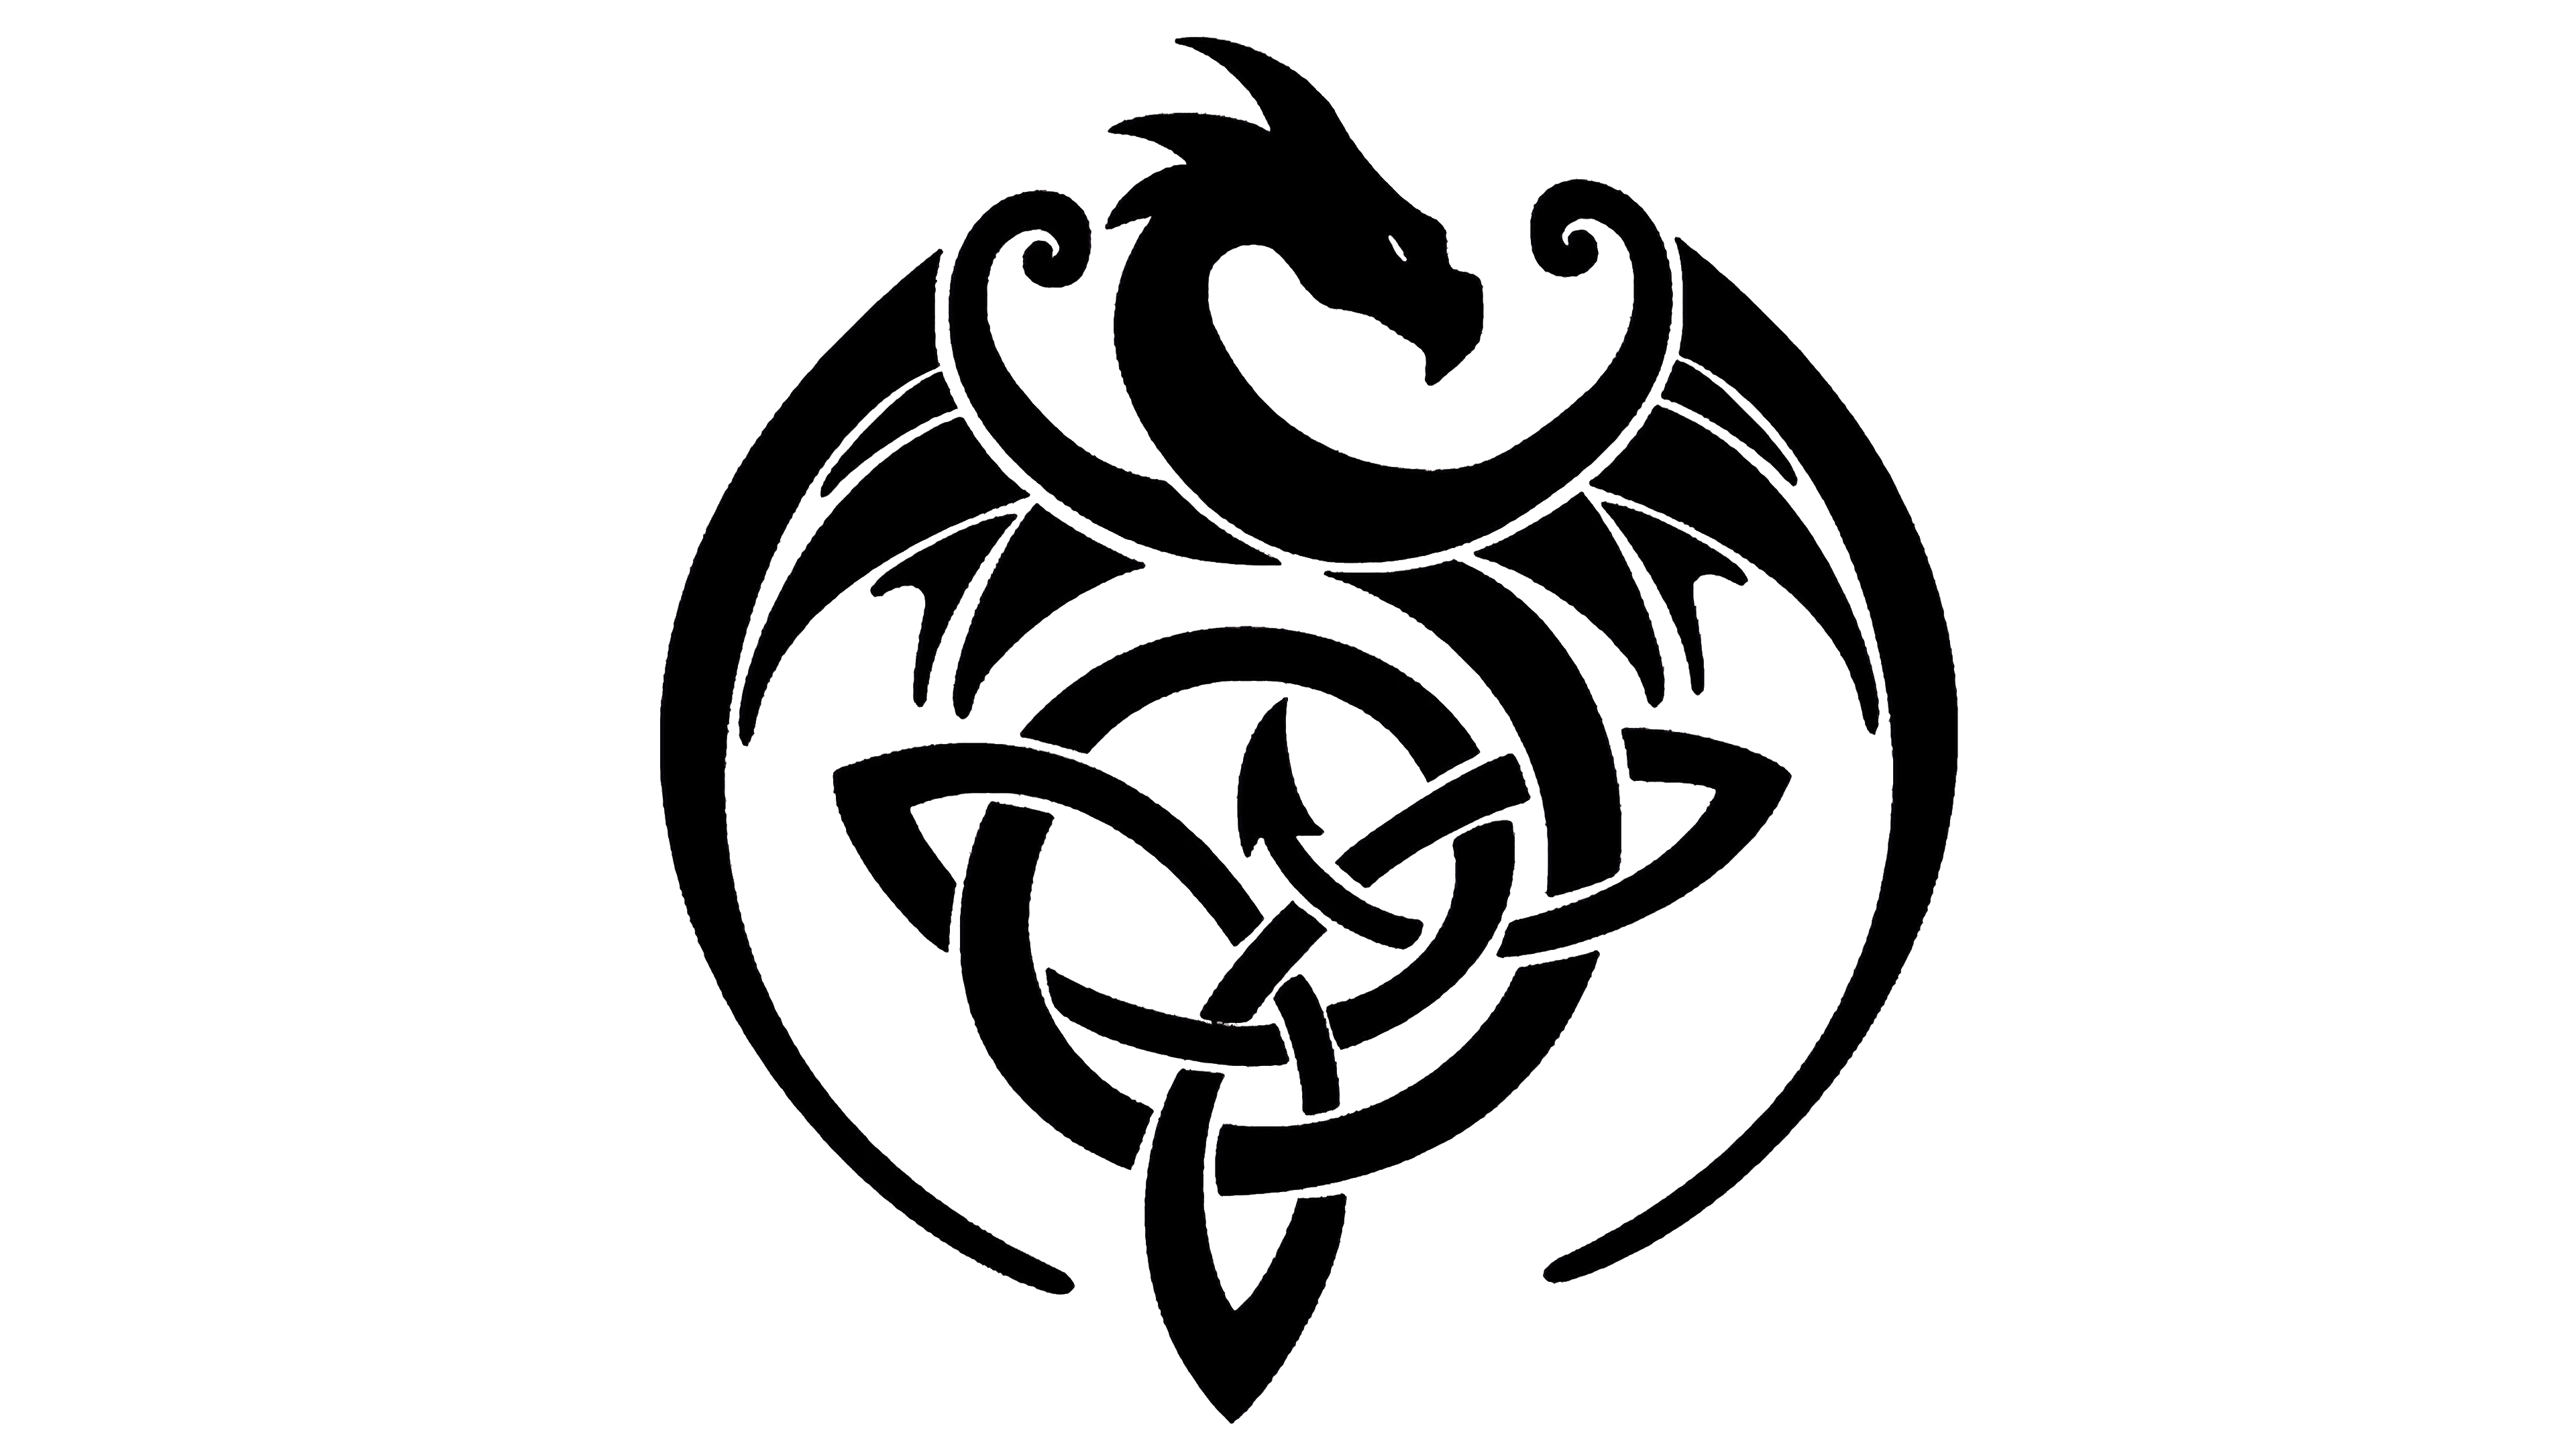 Irish Symbols And Meanings